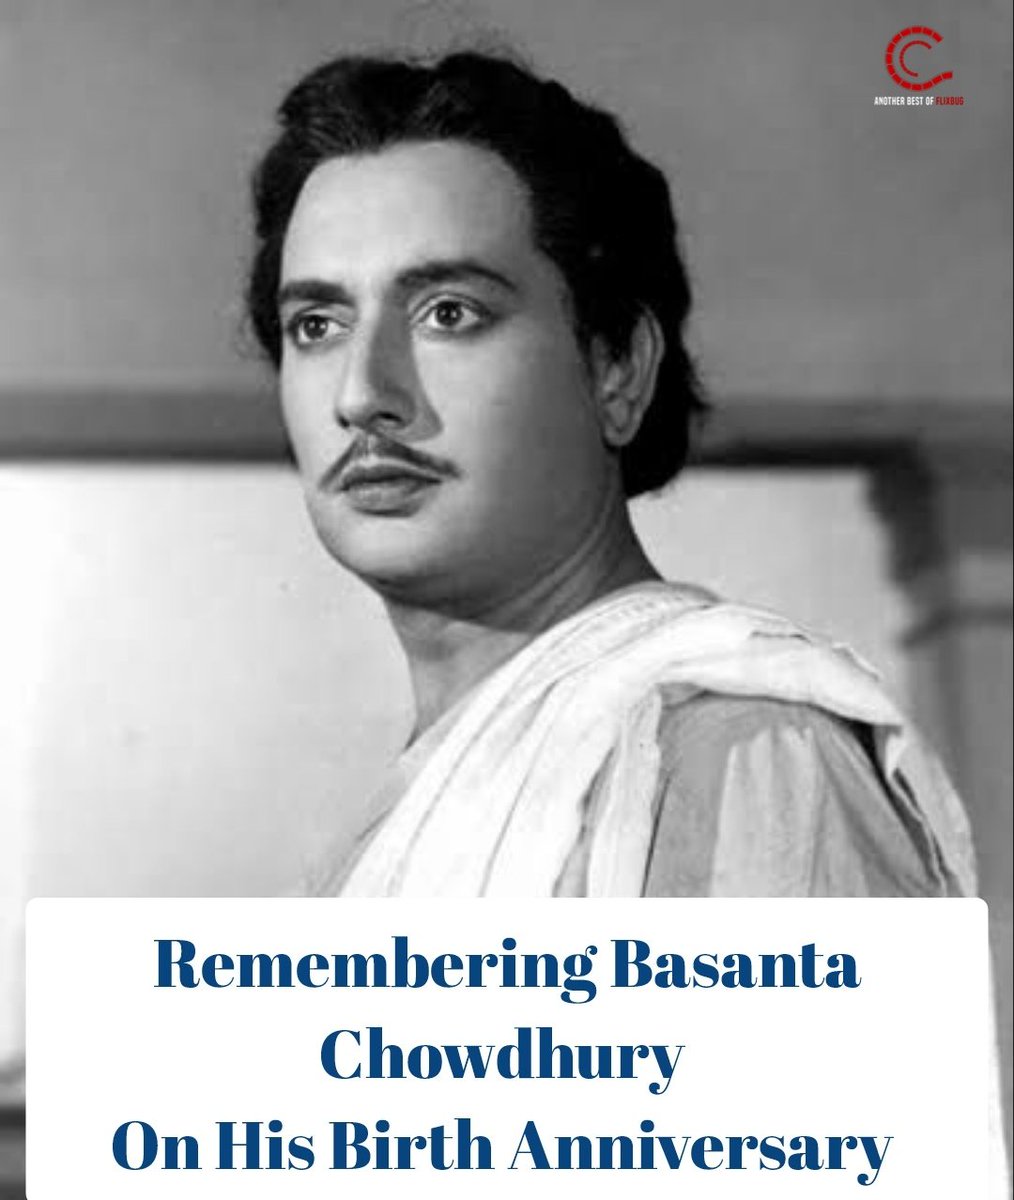 Remembering the Legendary Actor who has acted in both Hindi and Bengali Cinema, Basanta Chowdhury, from Ciinee. 

#basantachowdhury #birthanniversary #actor #legend #bengaliactor #hindiactor #ciinee